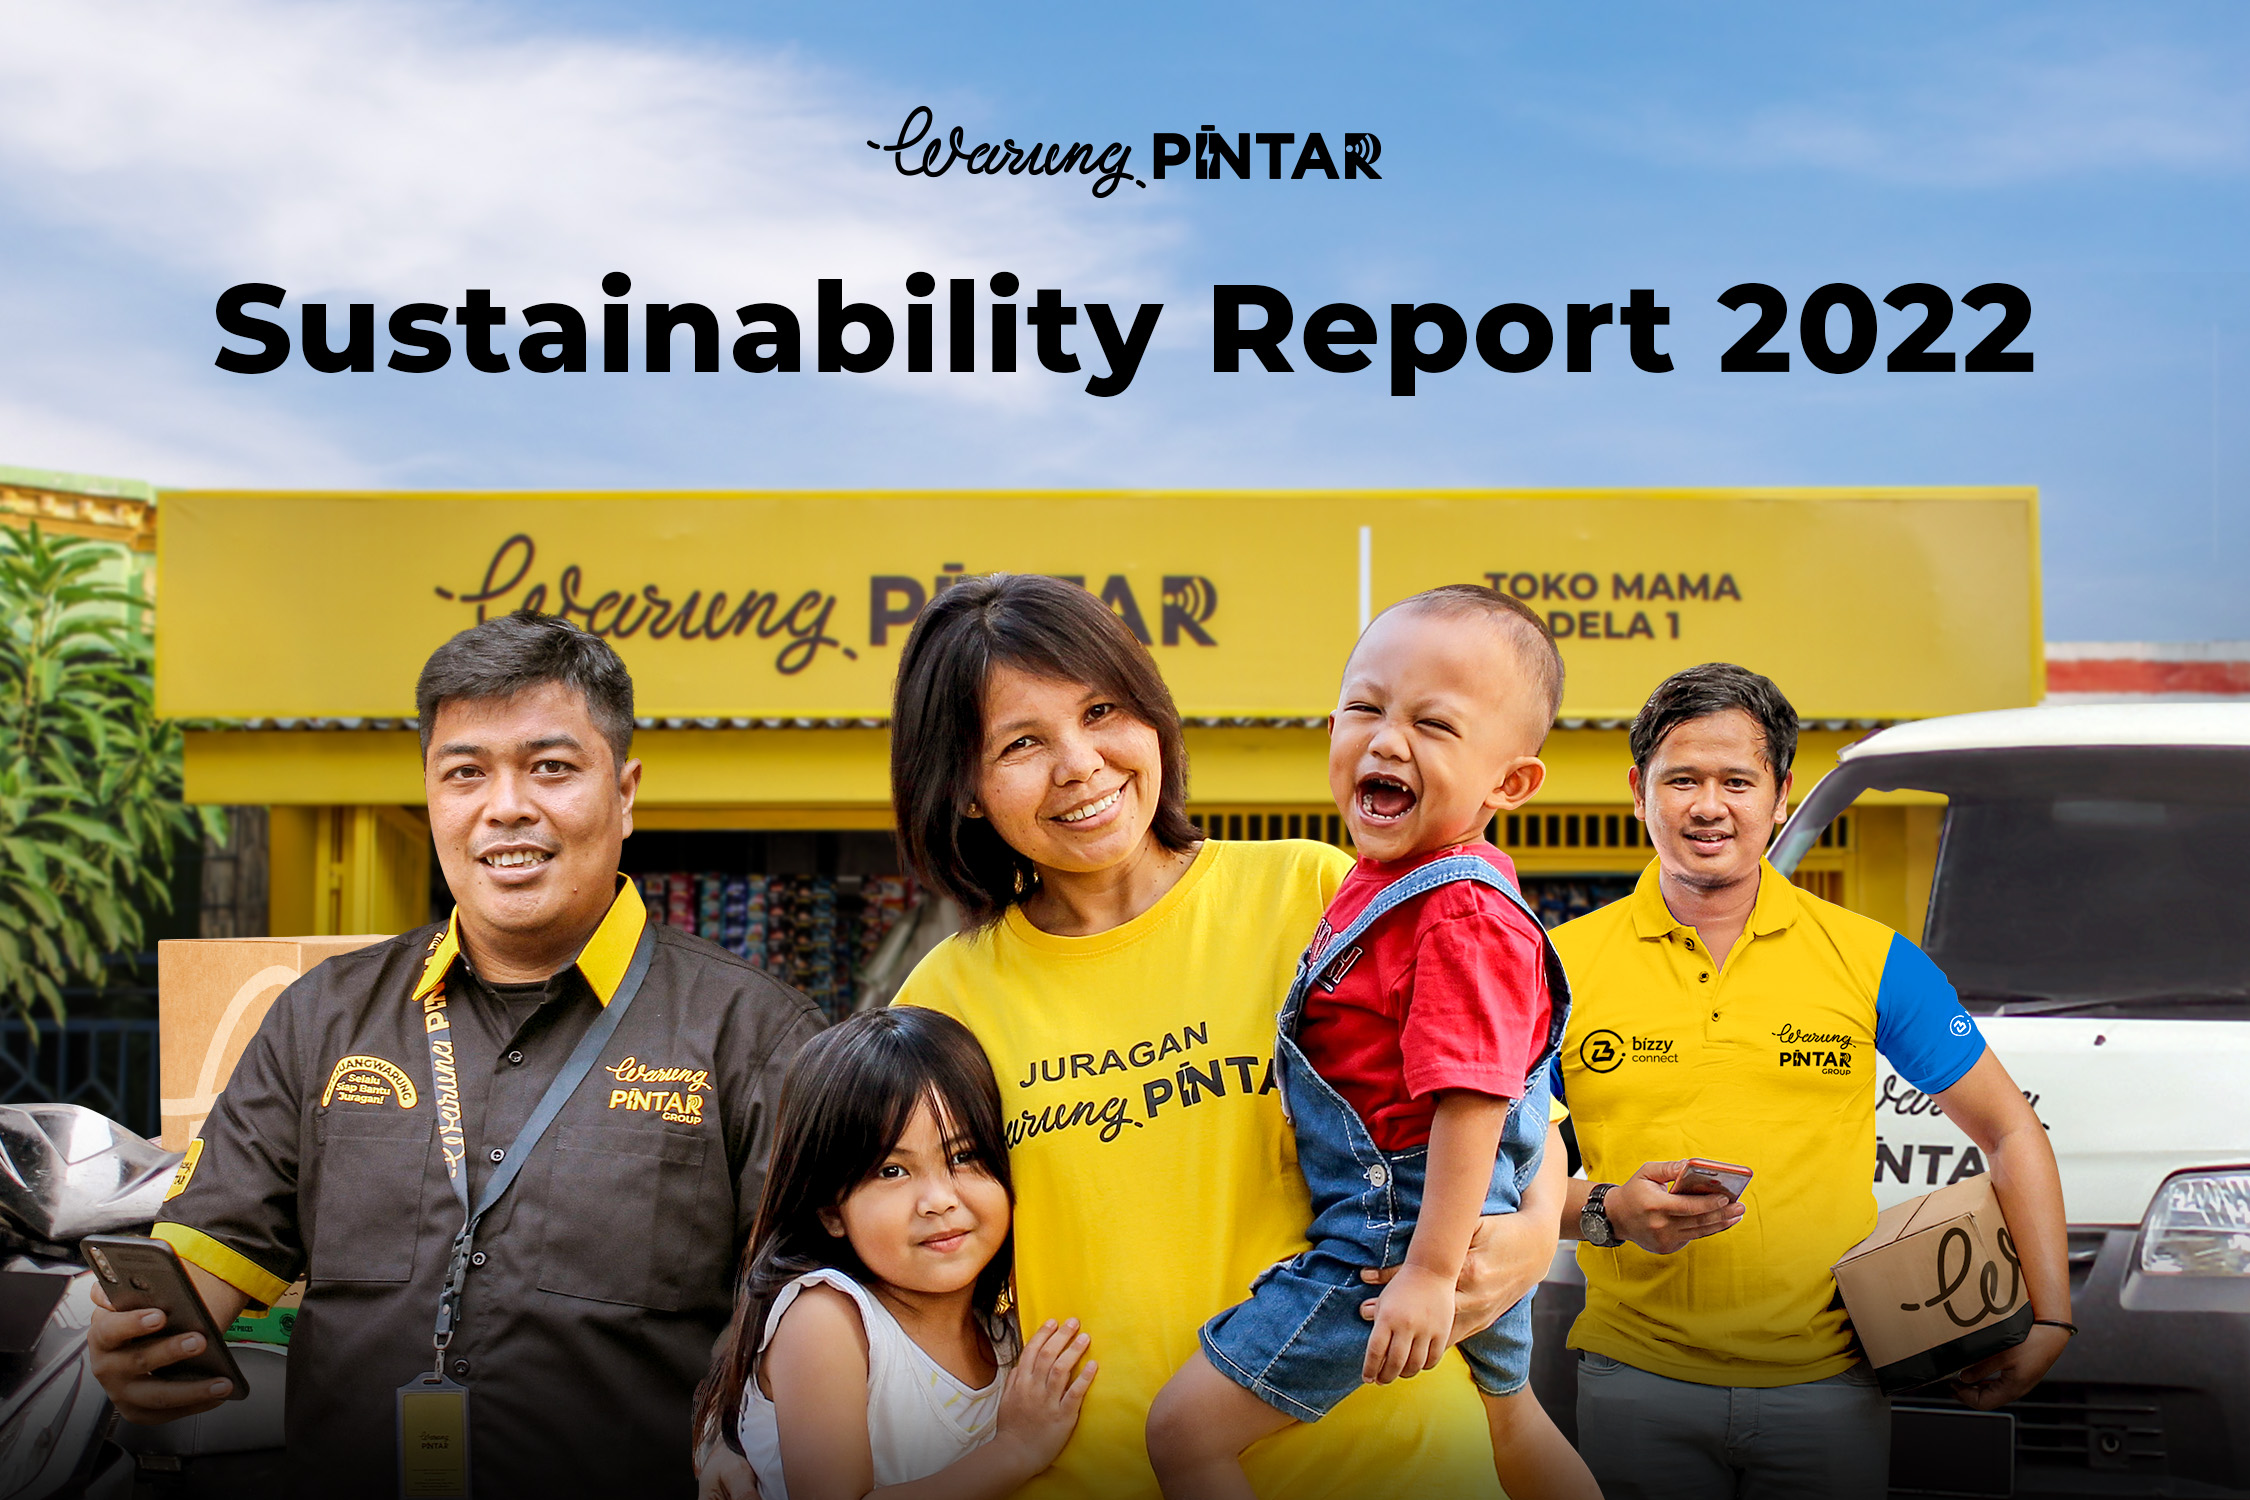 Warung Pintar Sustainability Report 2022 image